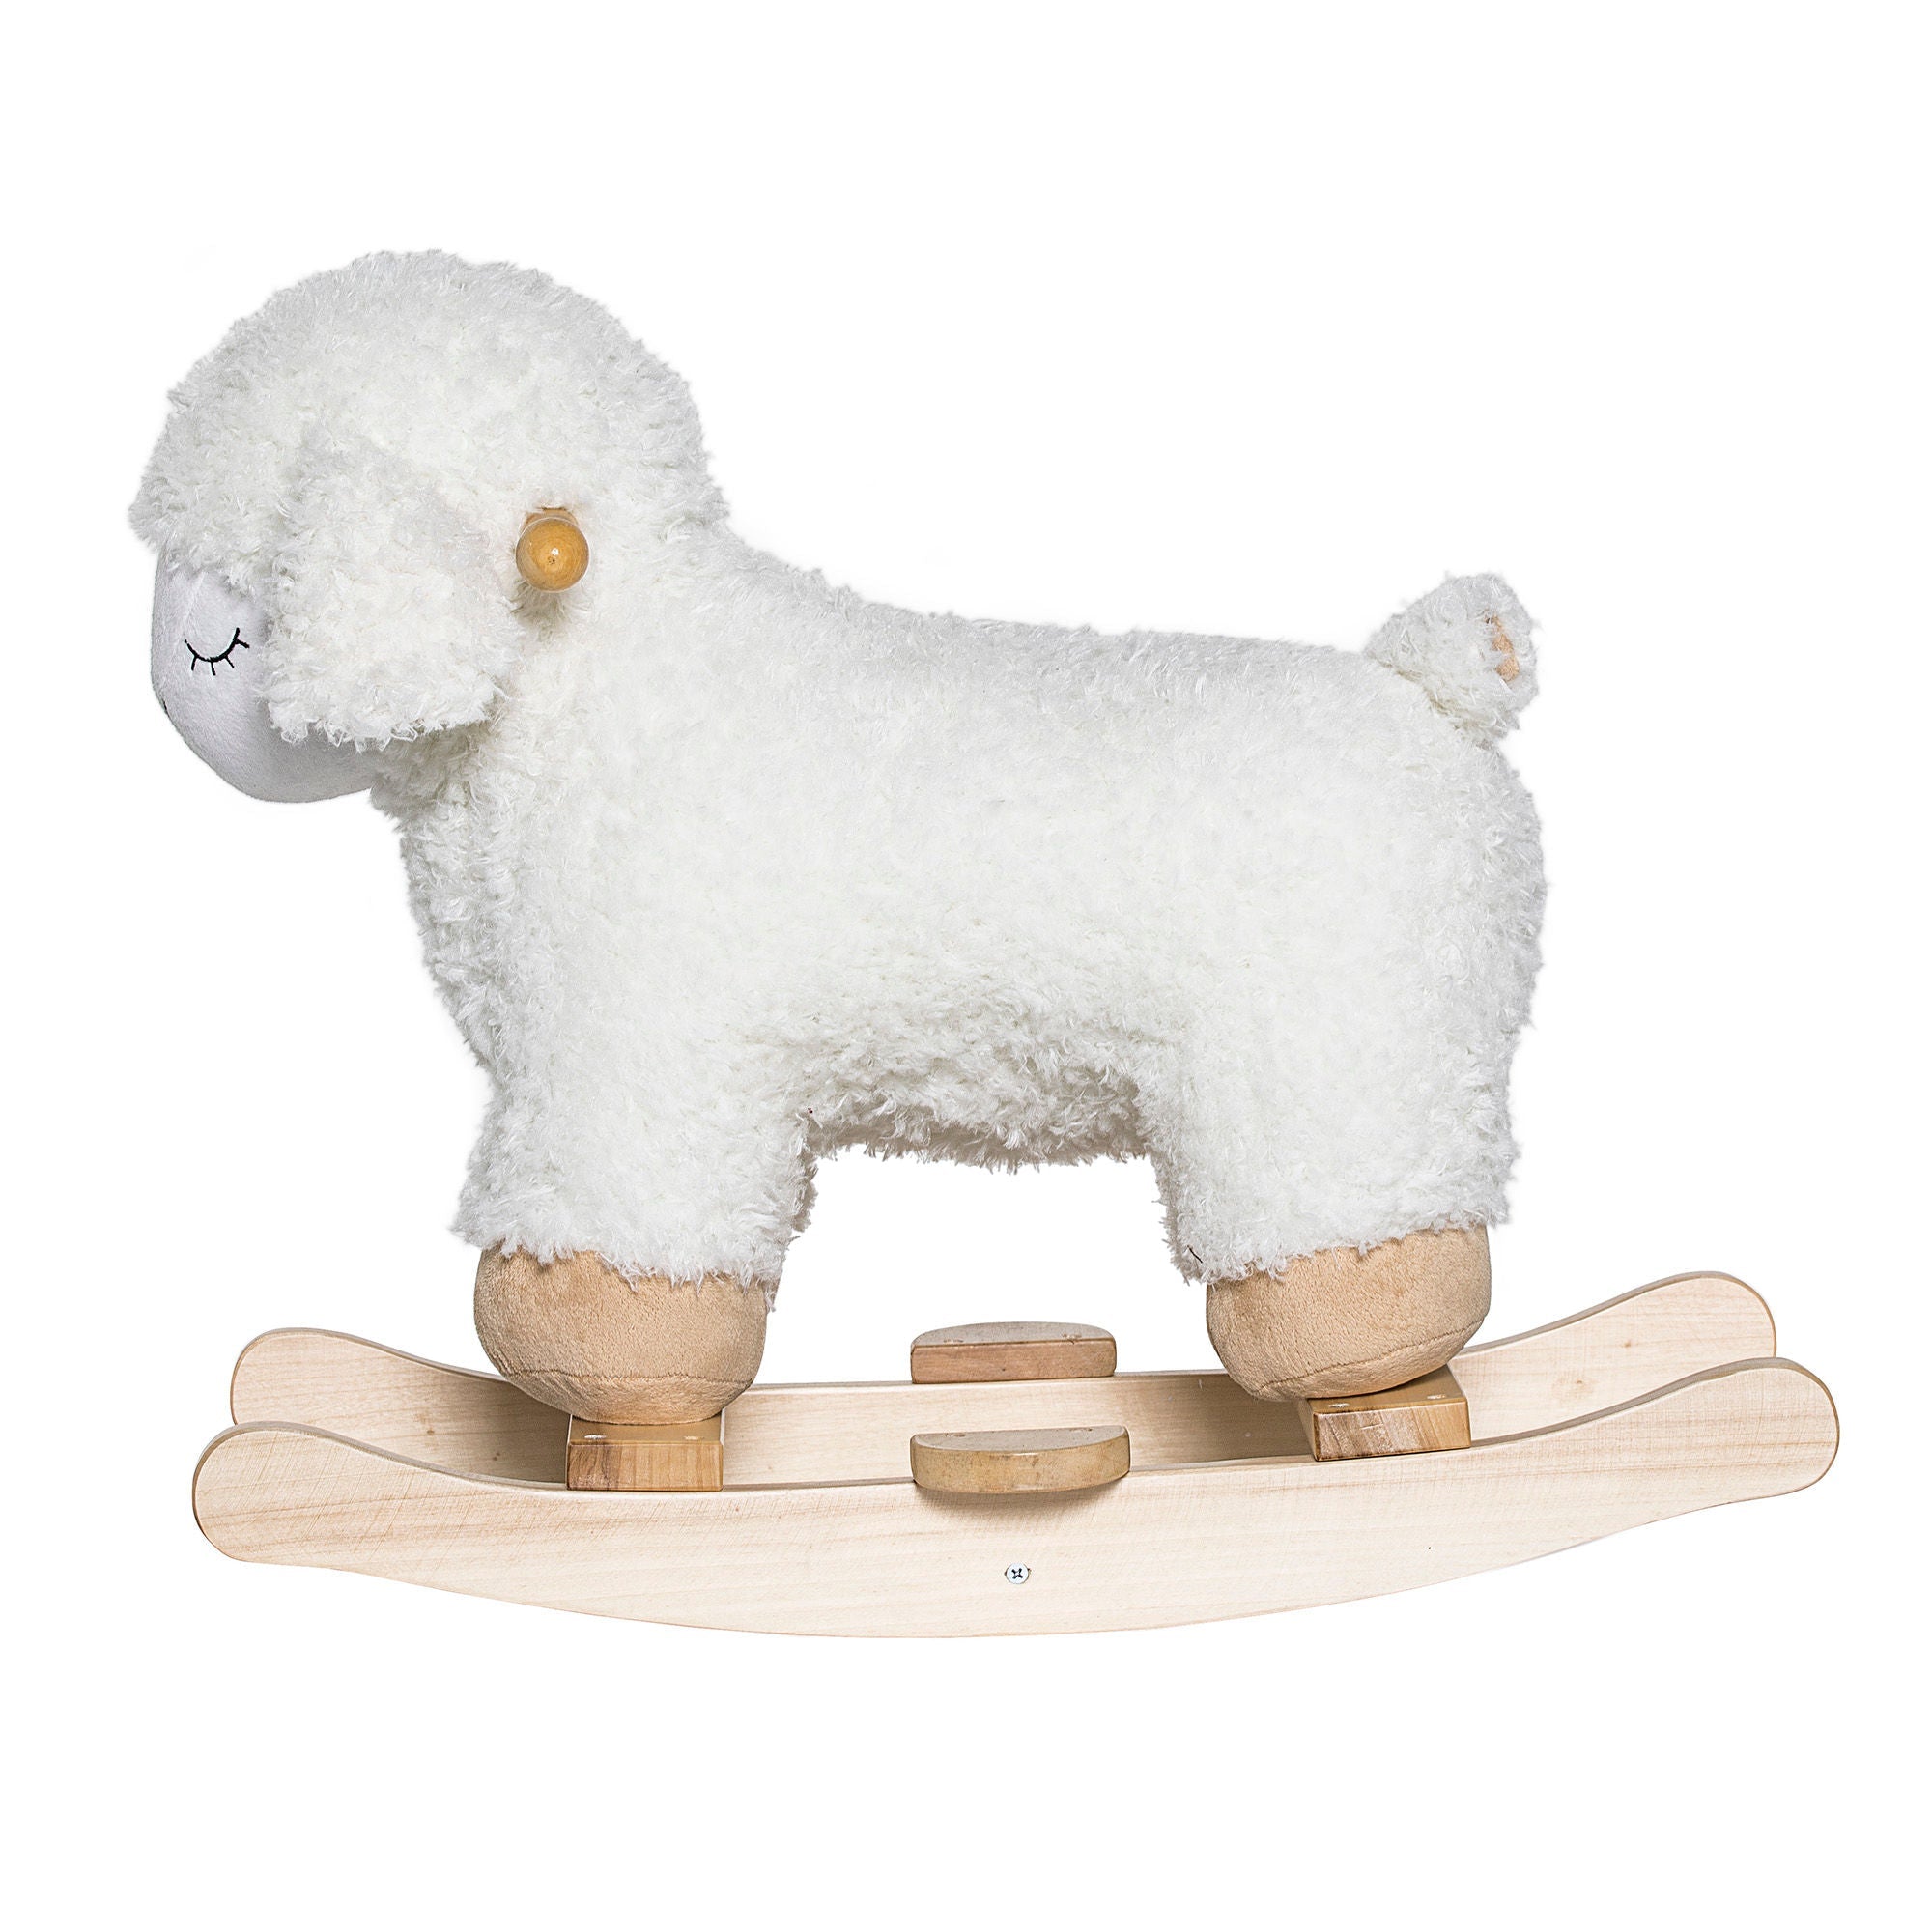 Bloomingville Mini Laasrith Rocking Toy, oveja, blanco, poliéster